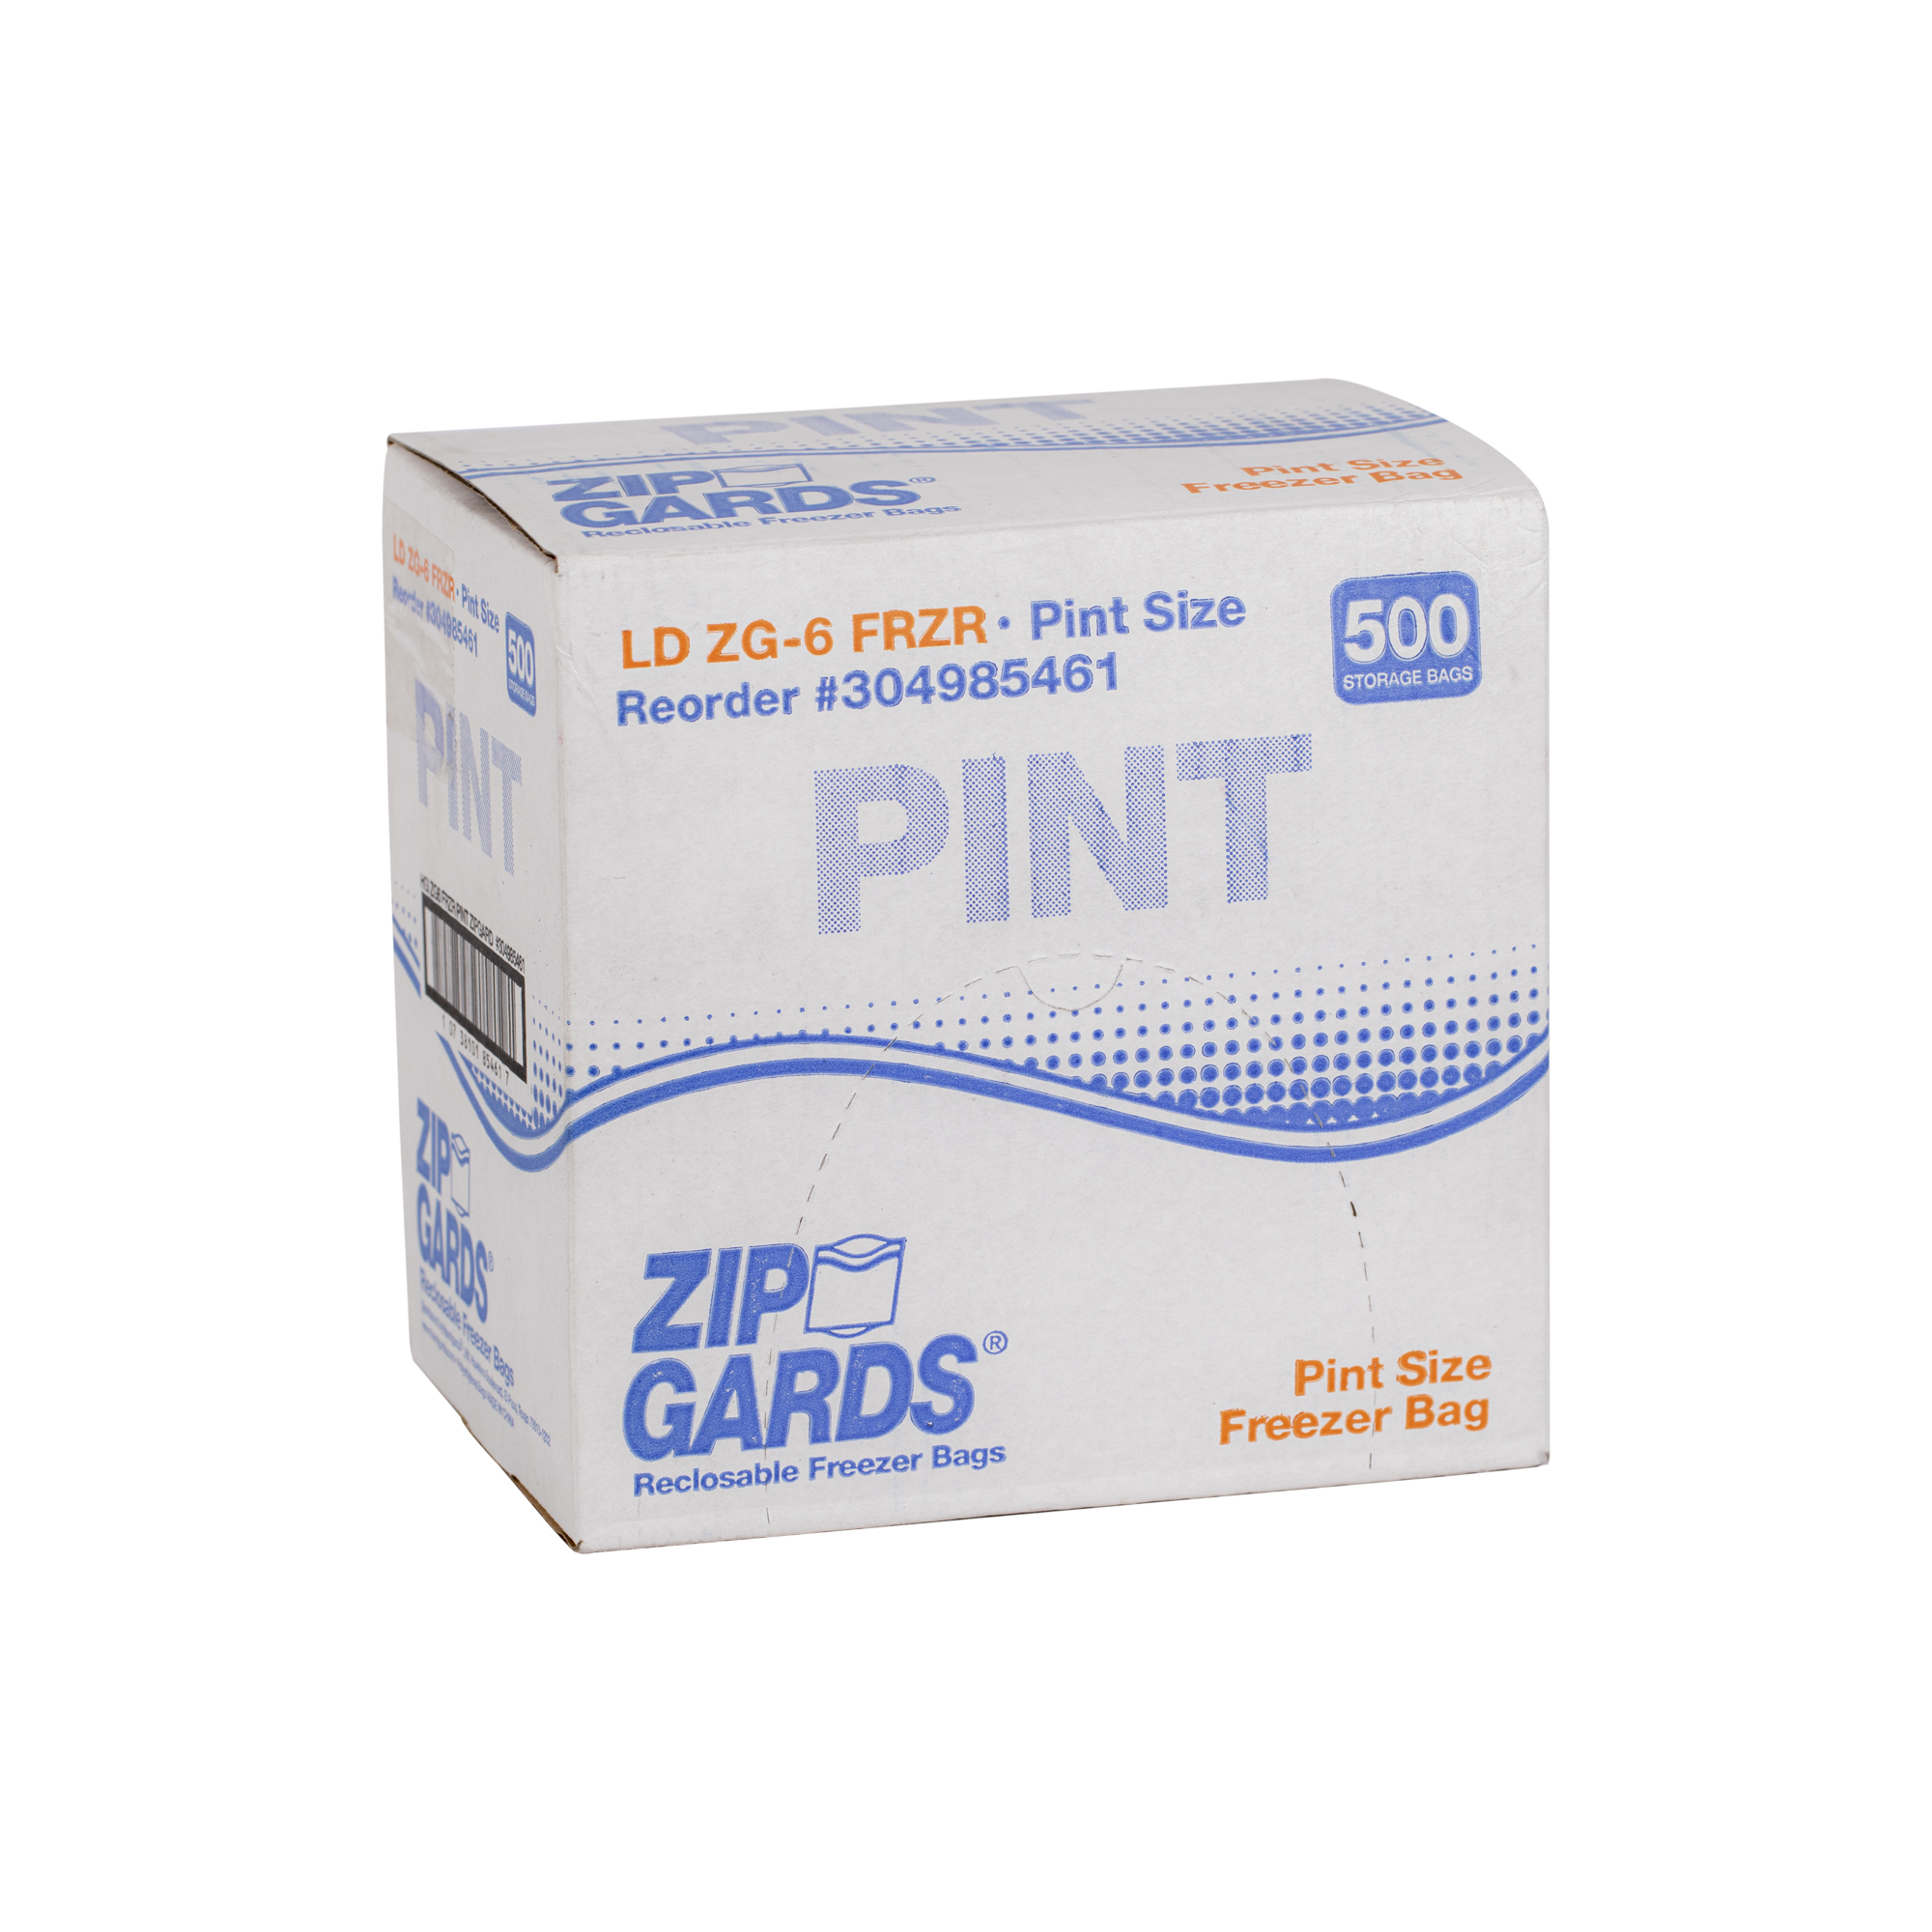 http://handgards.com/wp-content/uploads/2021/01/304985461-Zipgards%C2%AE-Low-Density-Freezer-Disposable-Reclosable-Bags-Pint.jpg